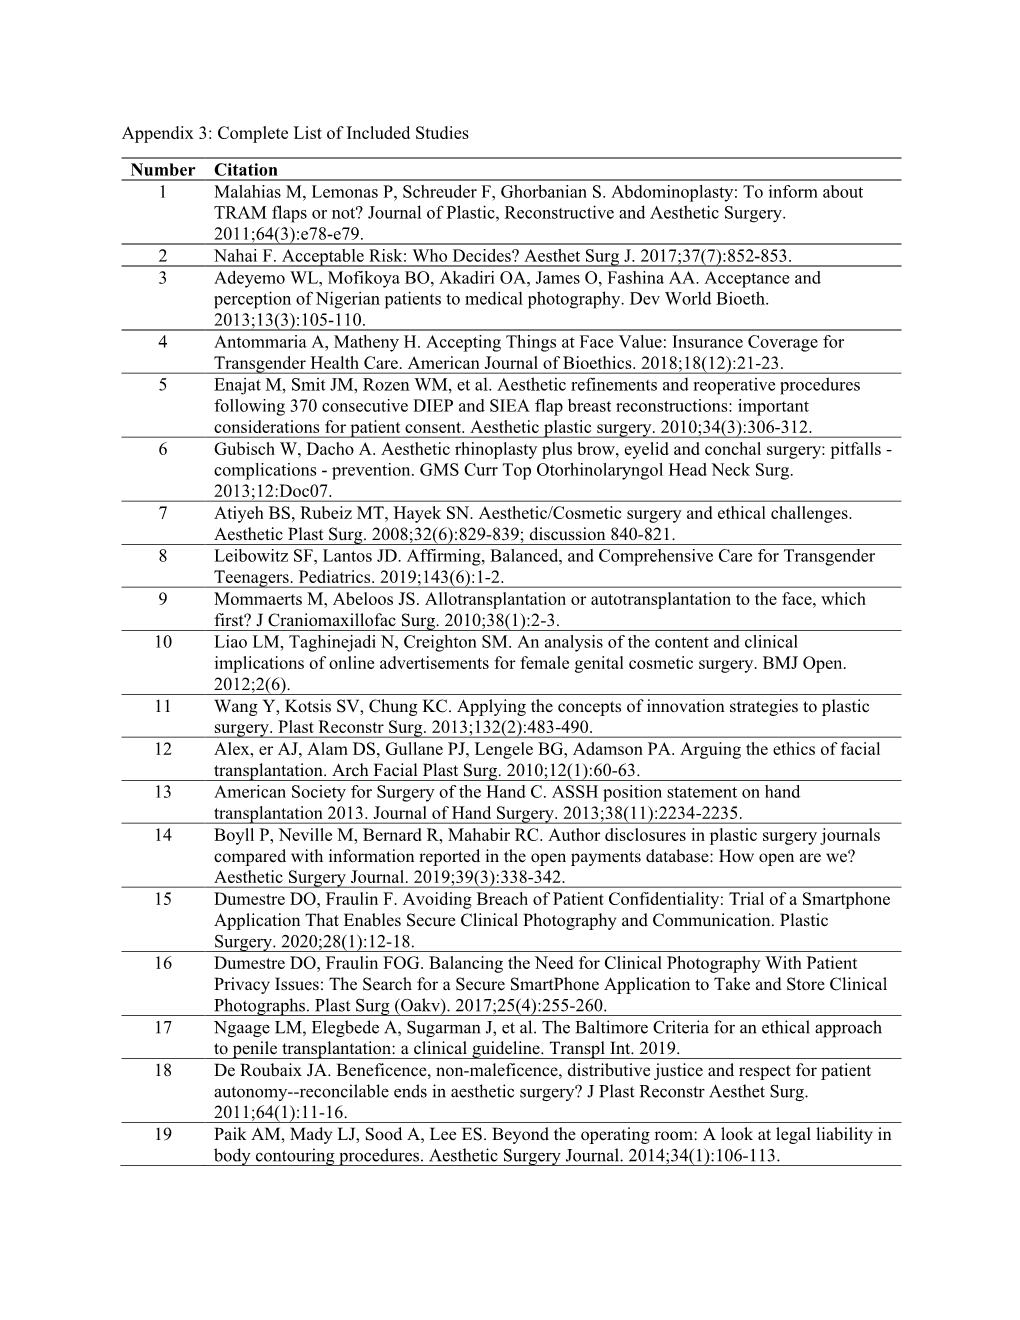 Complete List of Included Studies Number Citation 1 Malahias M, Lemonas P, Schreuder F, Ghorbanian S